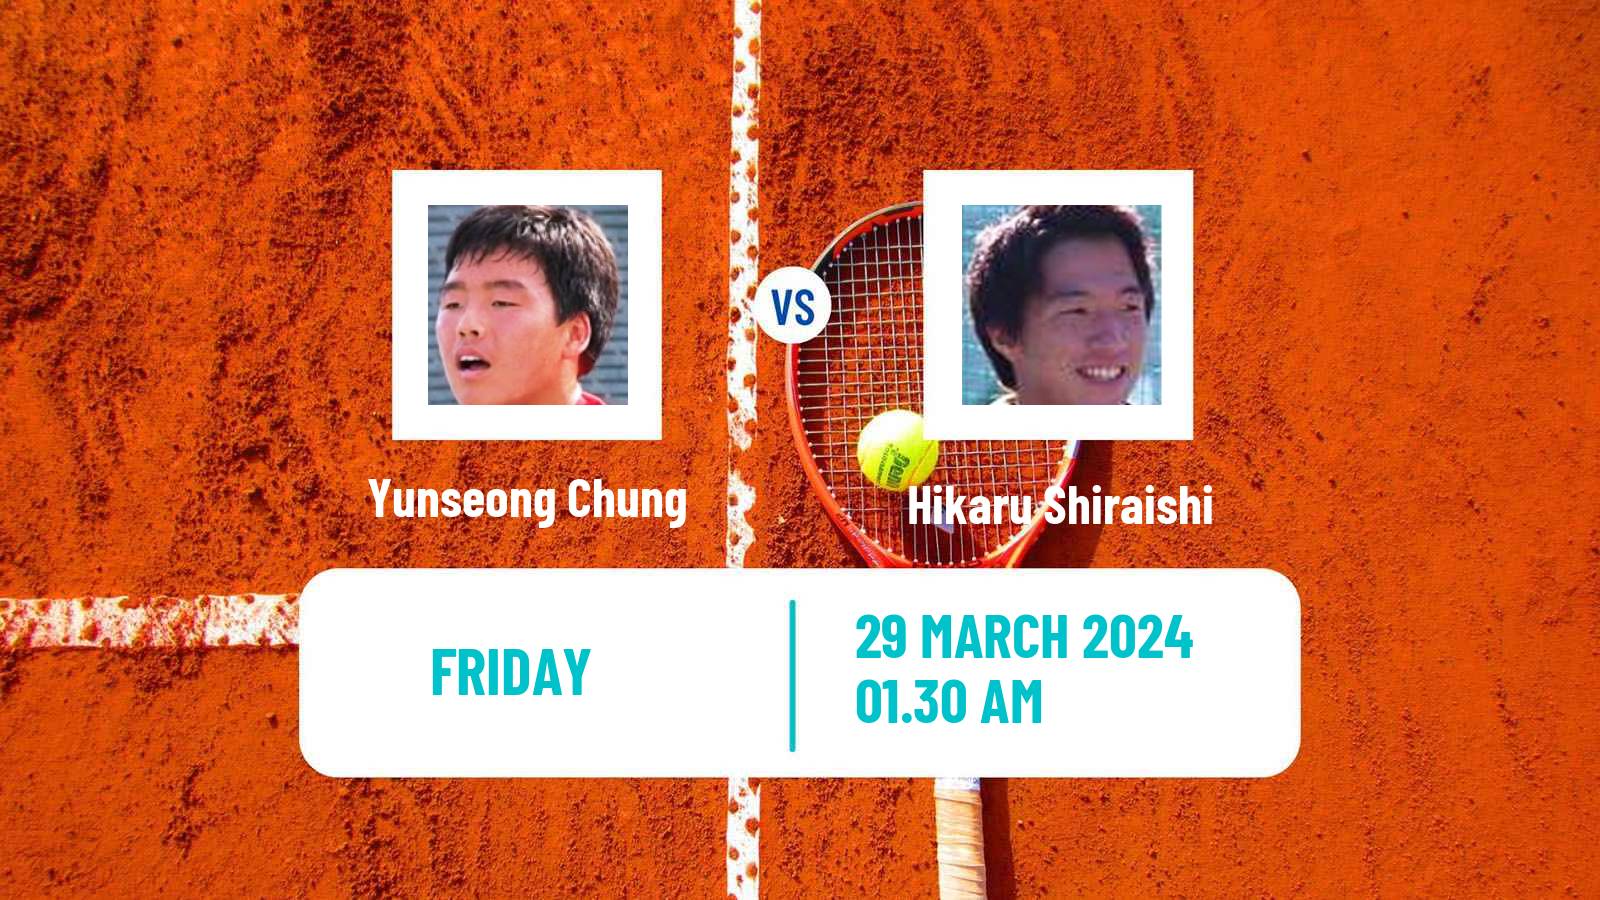 Tennis ITF M15 Tsukuba Men Yunseong Chung - Hikaru Shiraishi